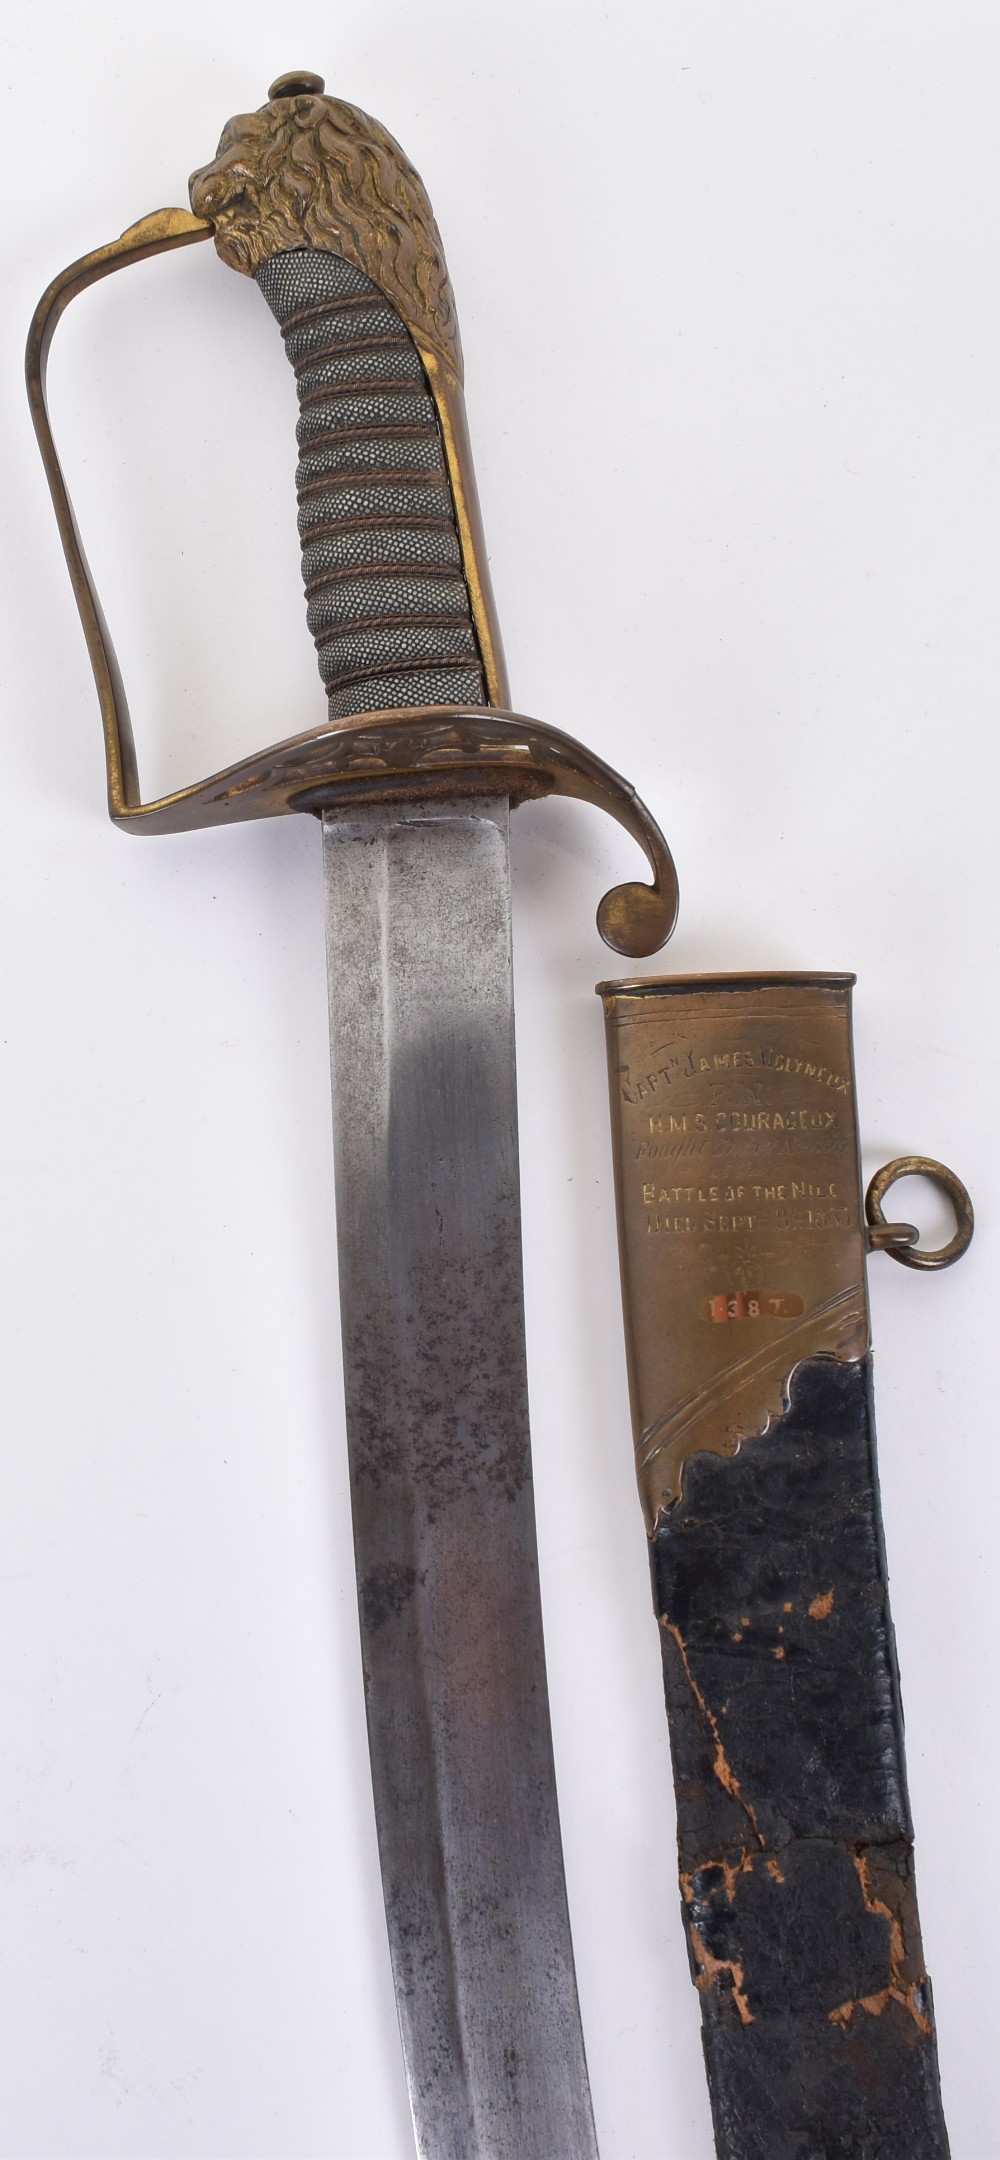 The sword of Captain James Molineaux Royal Navy c.1800